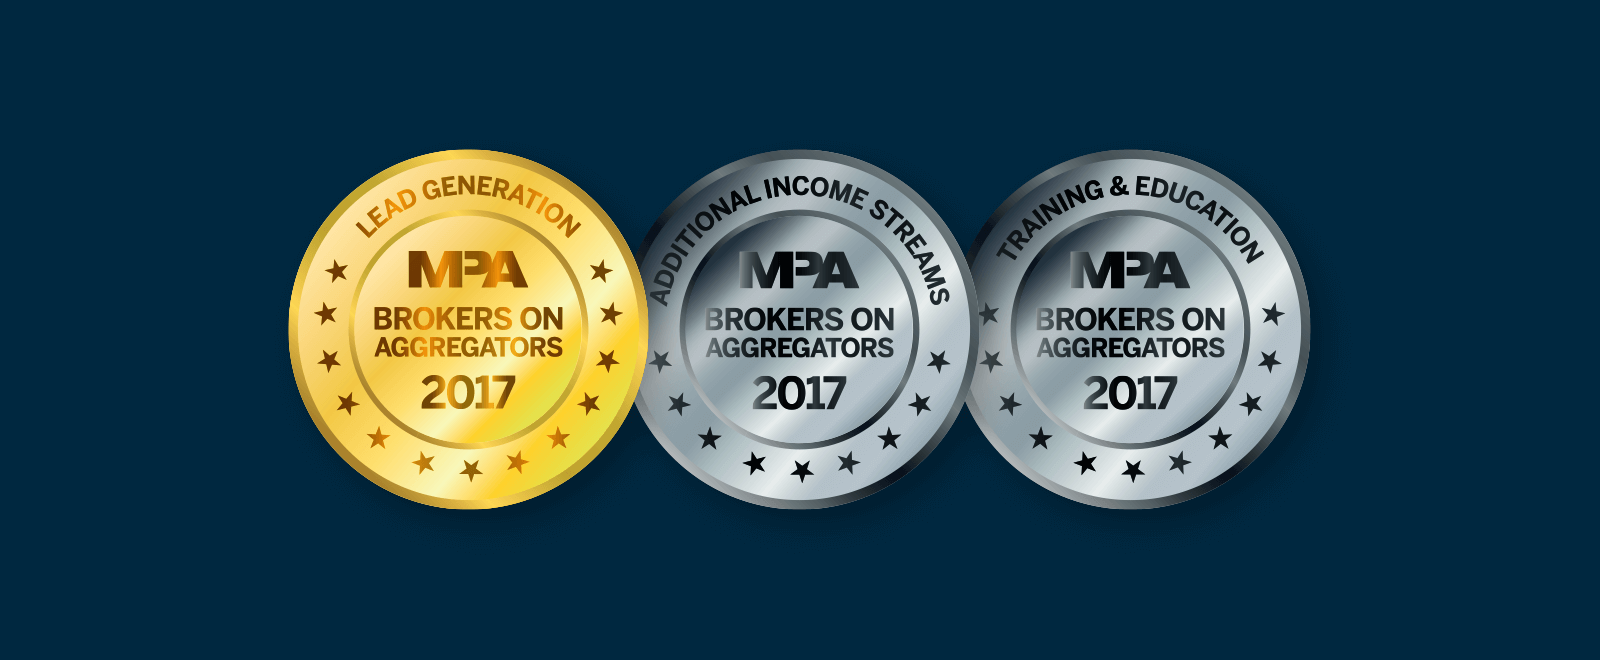 Broker On Aggregator Wins 2017